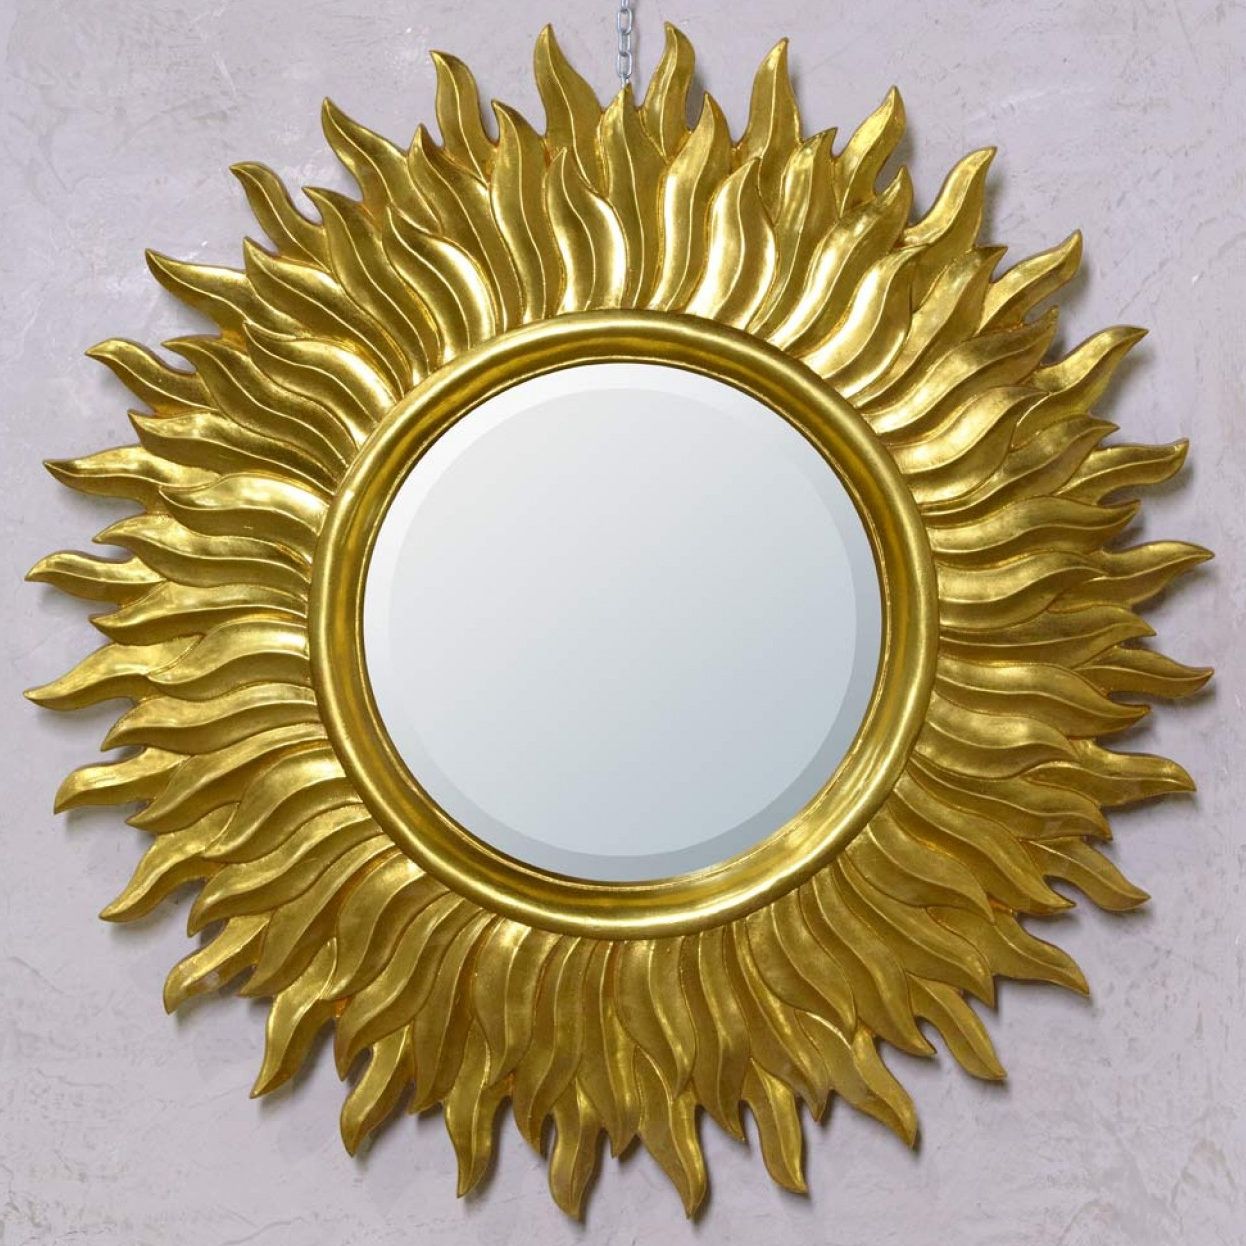 Antique Style Sunburst Gold Round Decorative Wall Mirror With Leaf Post Sunburst Round Wall Mirrors (View 6 of 15)